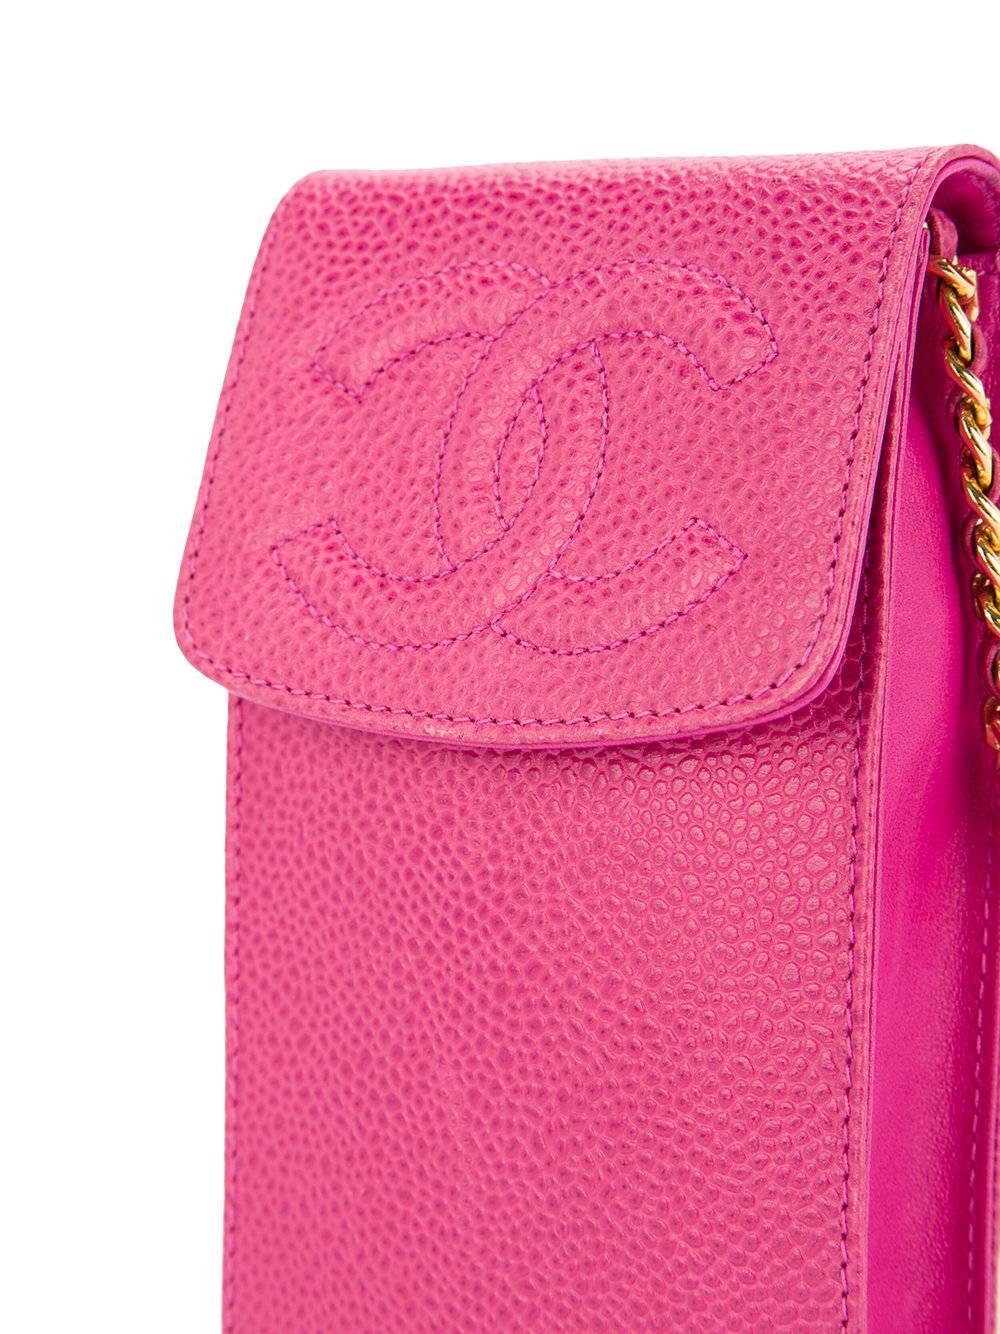 chanel pink phone bag